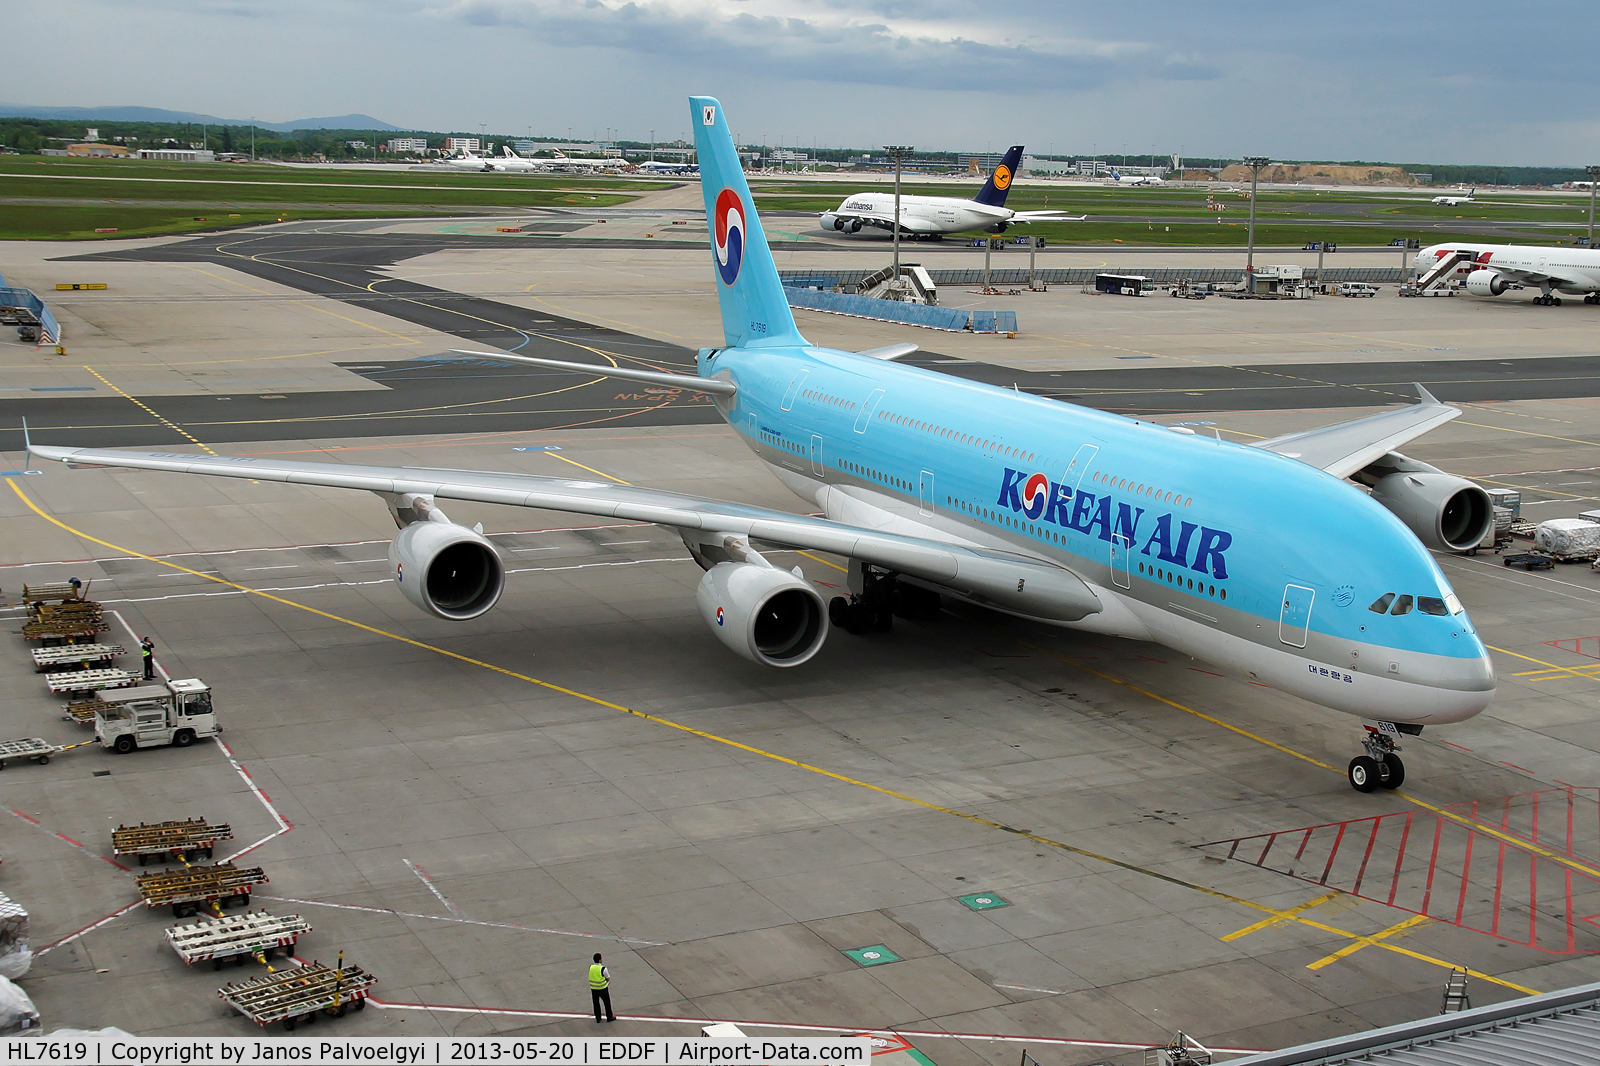 HL7619, 2012 Airbus A380-861 C/N 096, Korean Air Airbus A380-861 taxi to parking position in EDDF/FRA